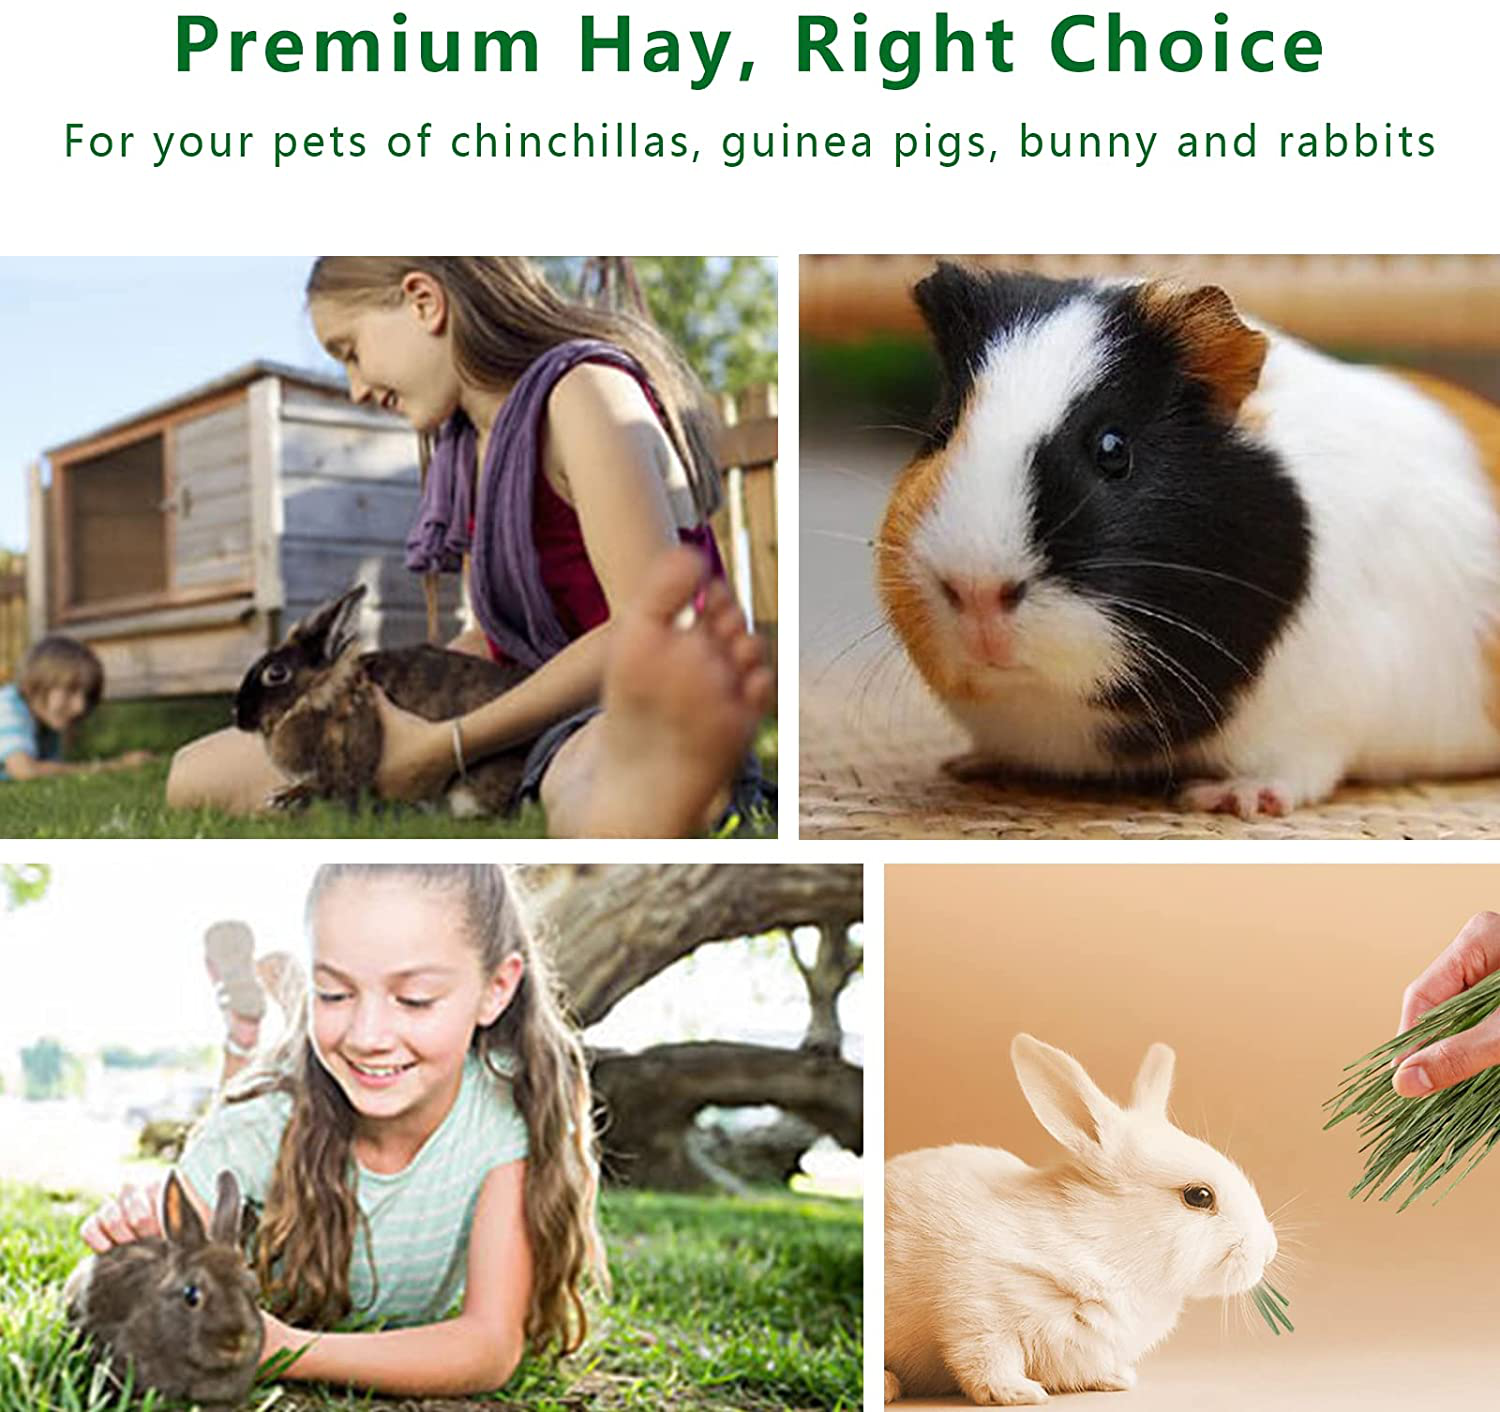 OHCOOL Timothy Hay Premium Sweet Fresh Hay for Guinea Pigs Rabbits Chinchilla Bunny